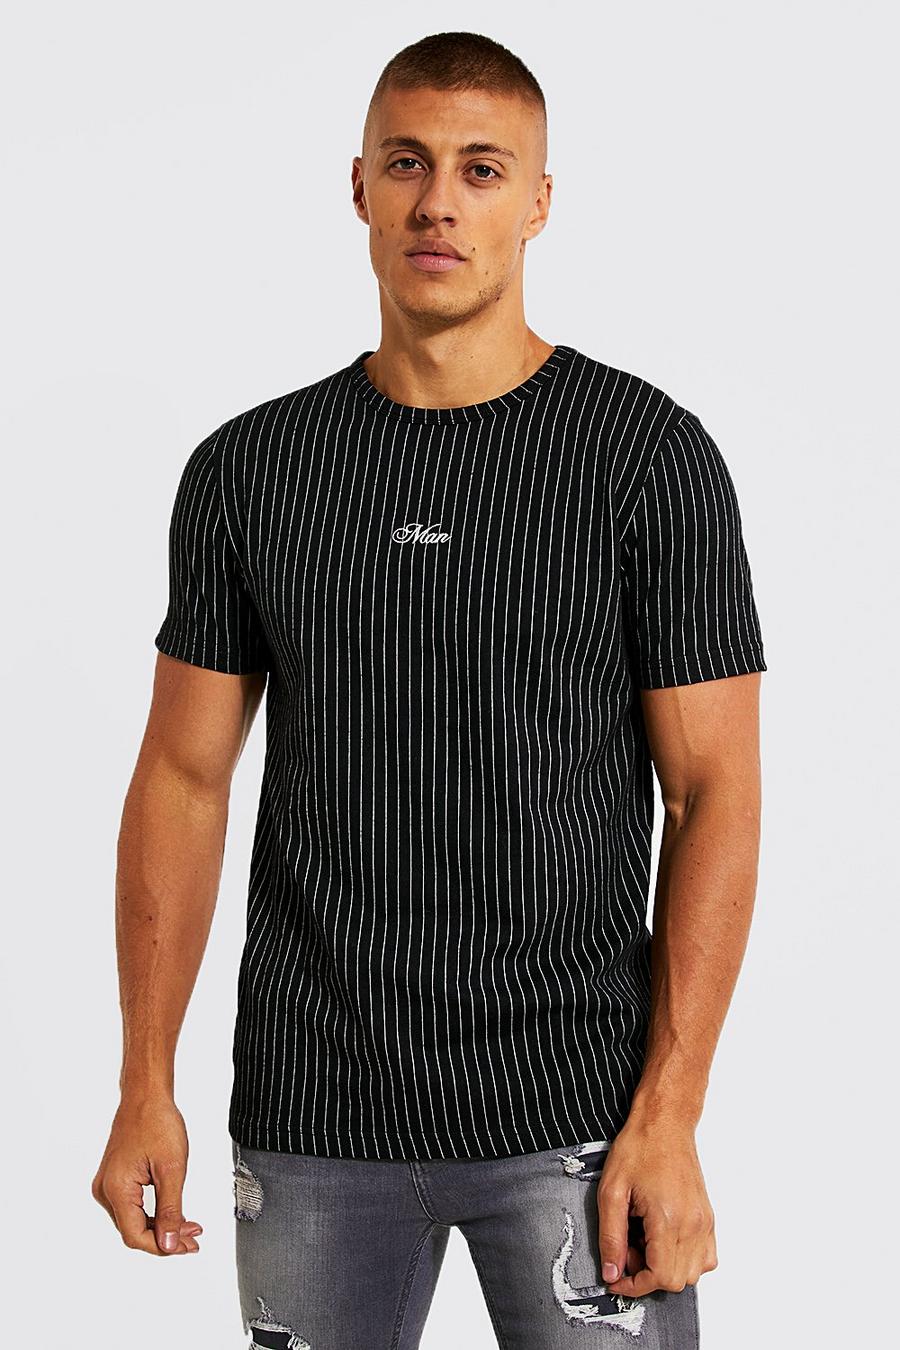 T-shirt Man Slim Fit in jacquard a righe verticali, Black negro